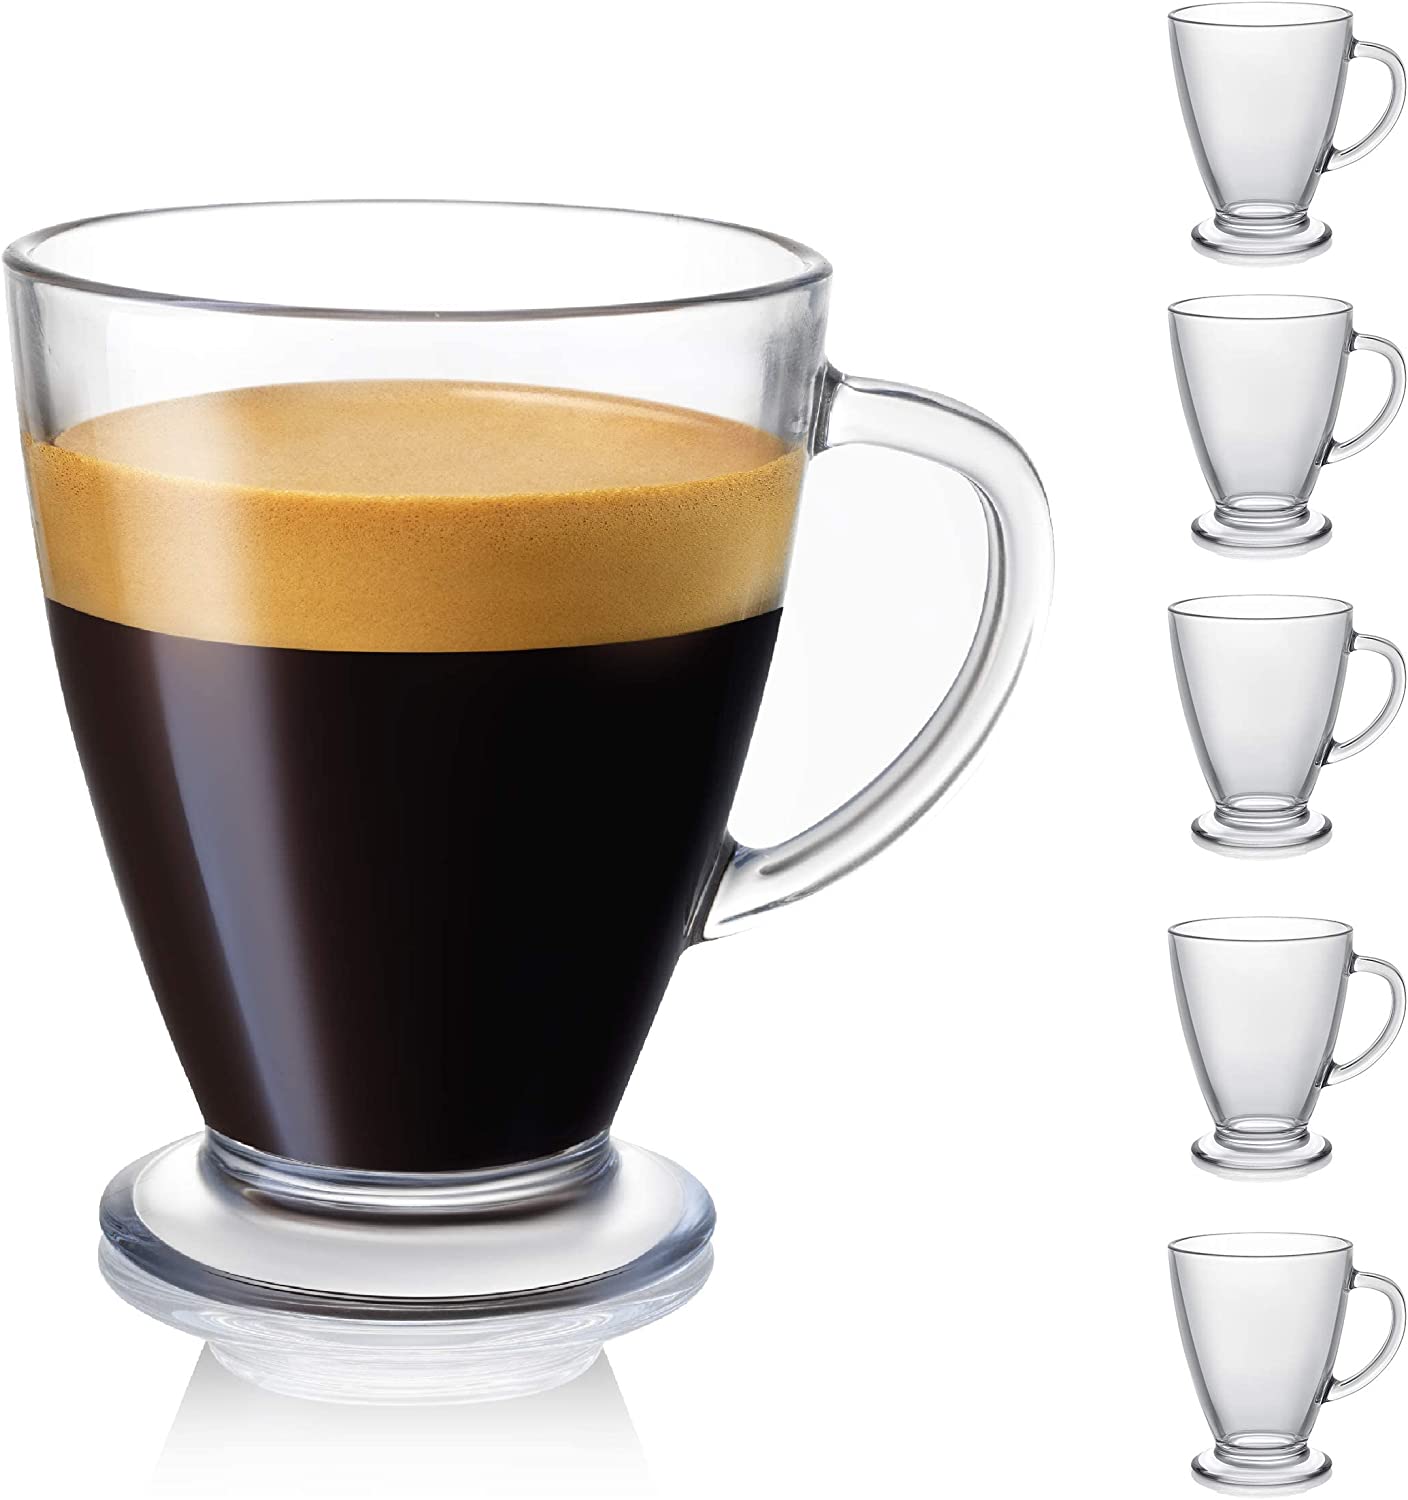 6-Pack JoyJolt clear glass Declan Coffee Mugs (15 oz) $14.95 at Essential Products USA via Amazon